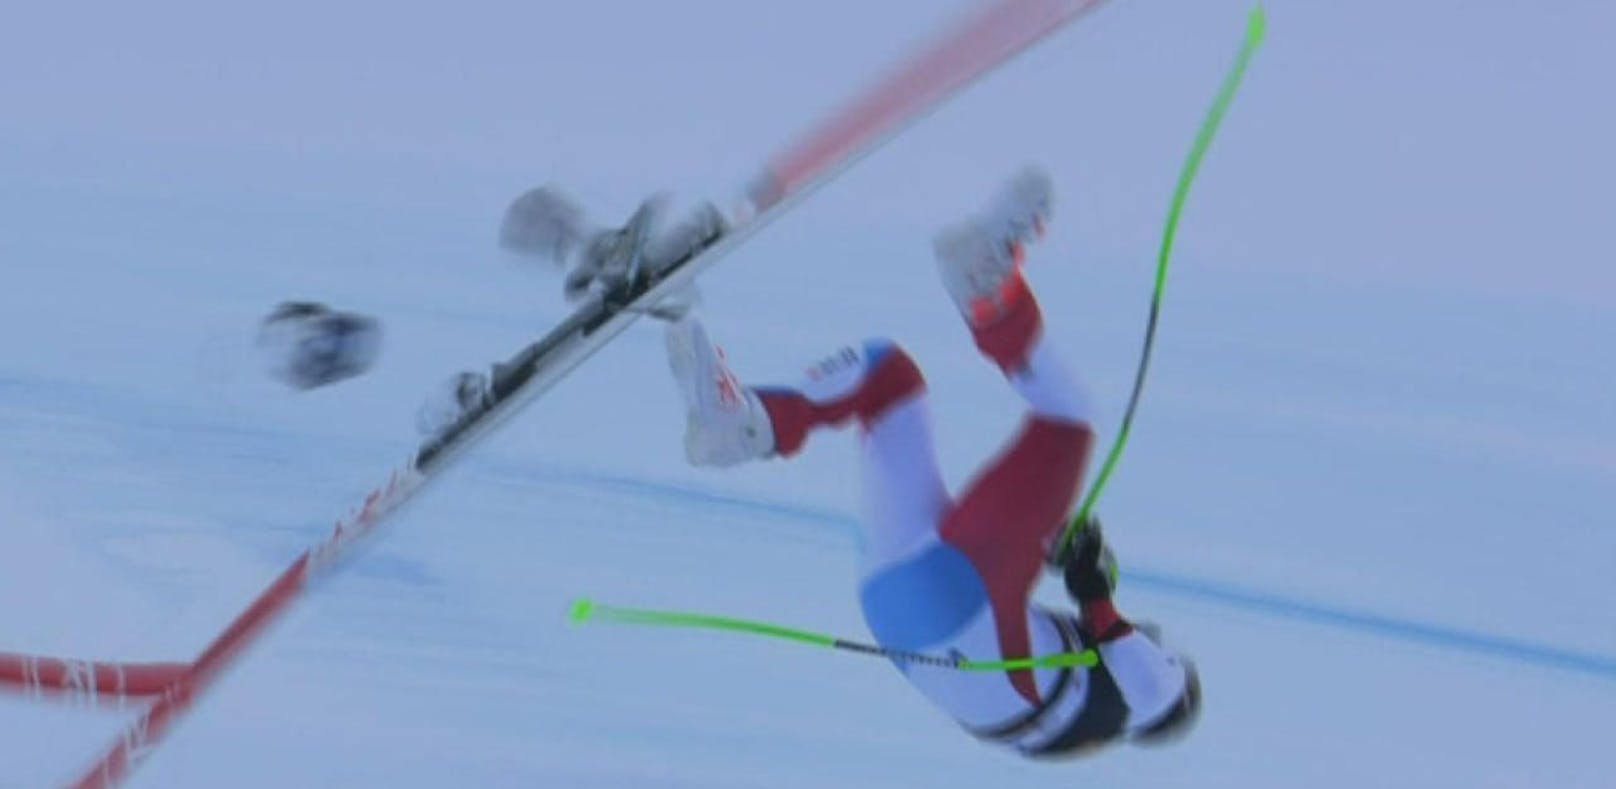 Ski-Ass beendet Saison nach schwerem Sturz